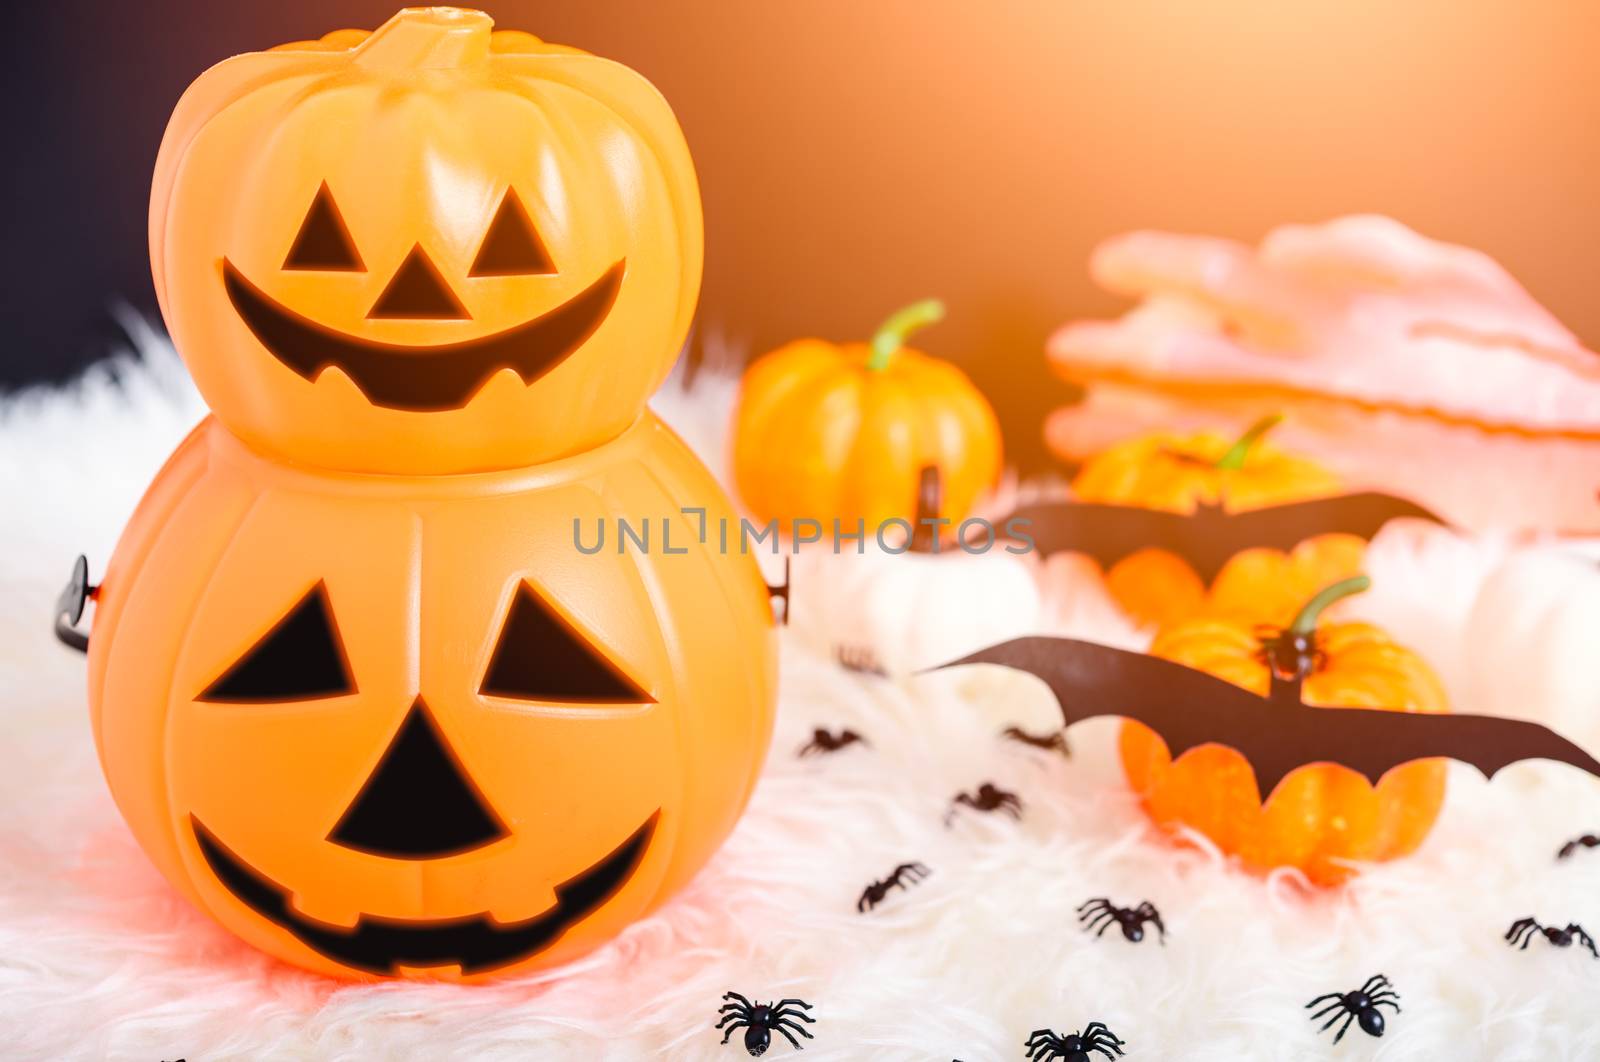 Pumpkin Jack creepy, spider and bat in photo, Halloween day conc by Sorapop